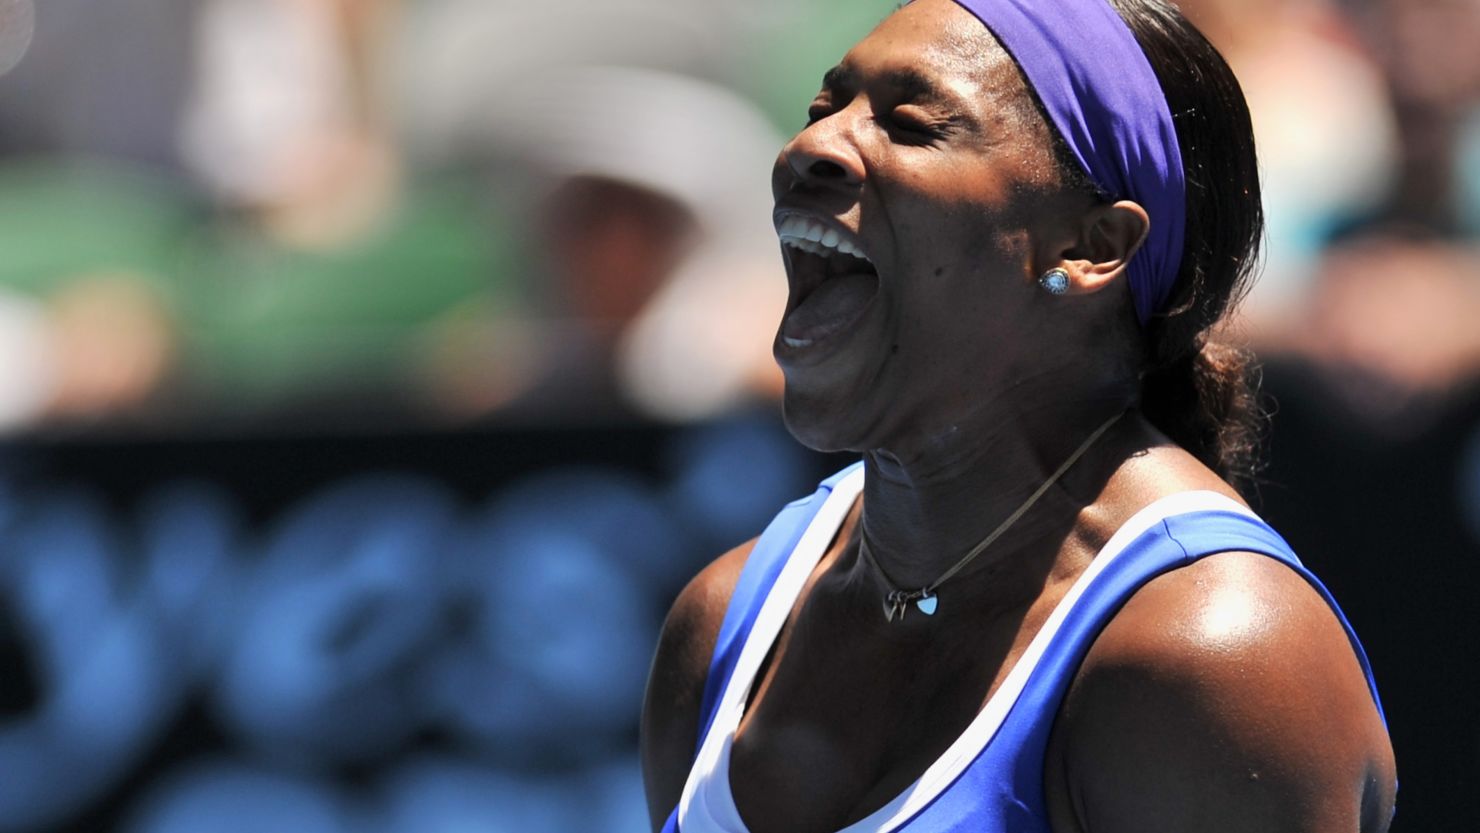 World No. 12 Serena Williams has won the Australian Open women's singles title five times, an Open era record.